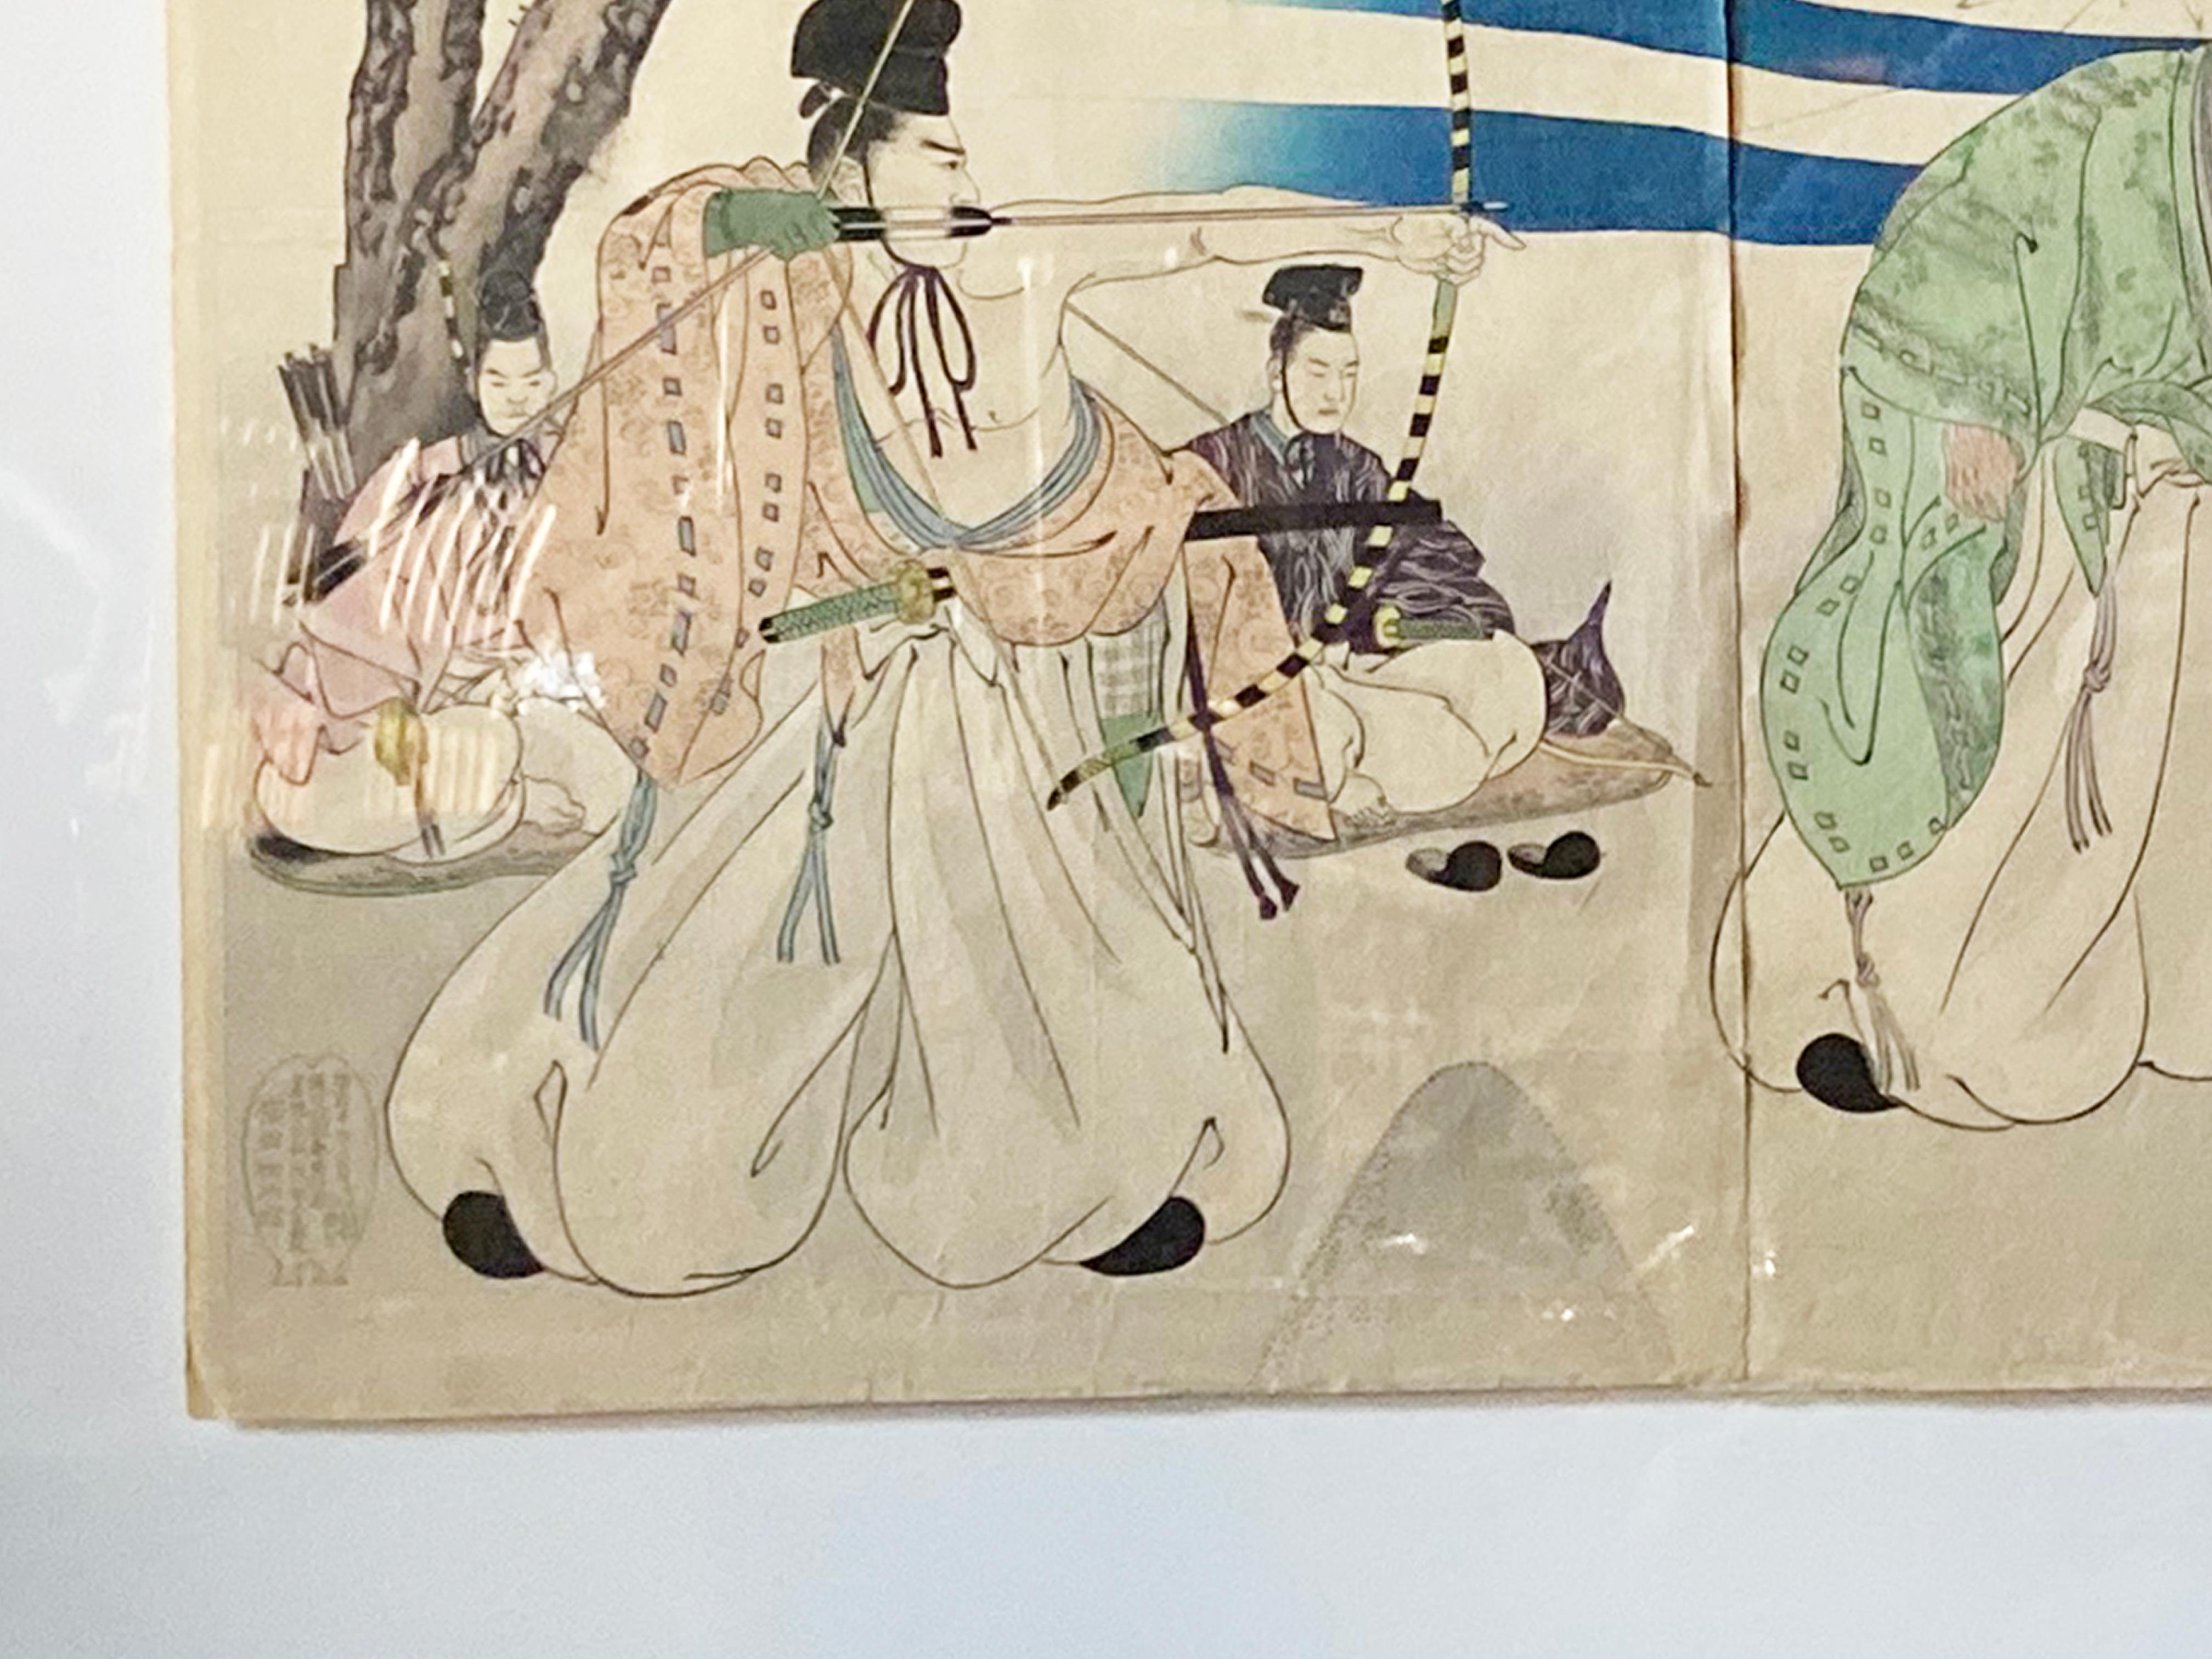 Japanese Meiji Chikanobu Toyohara Framed Woodblock Print with Archery Tournament For Sale 1